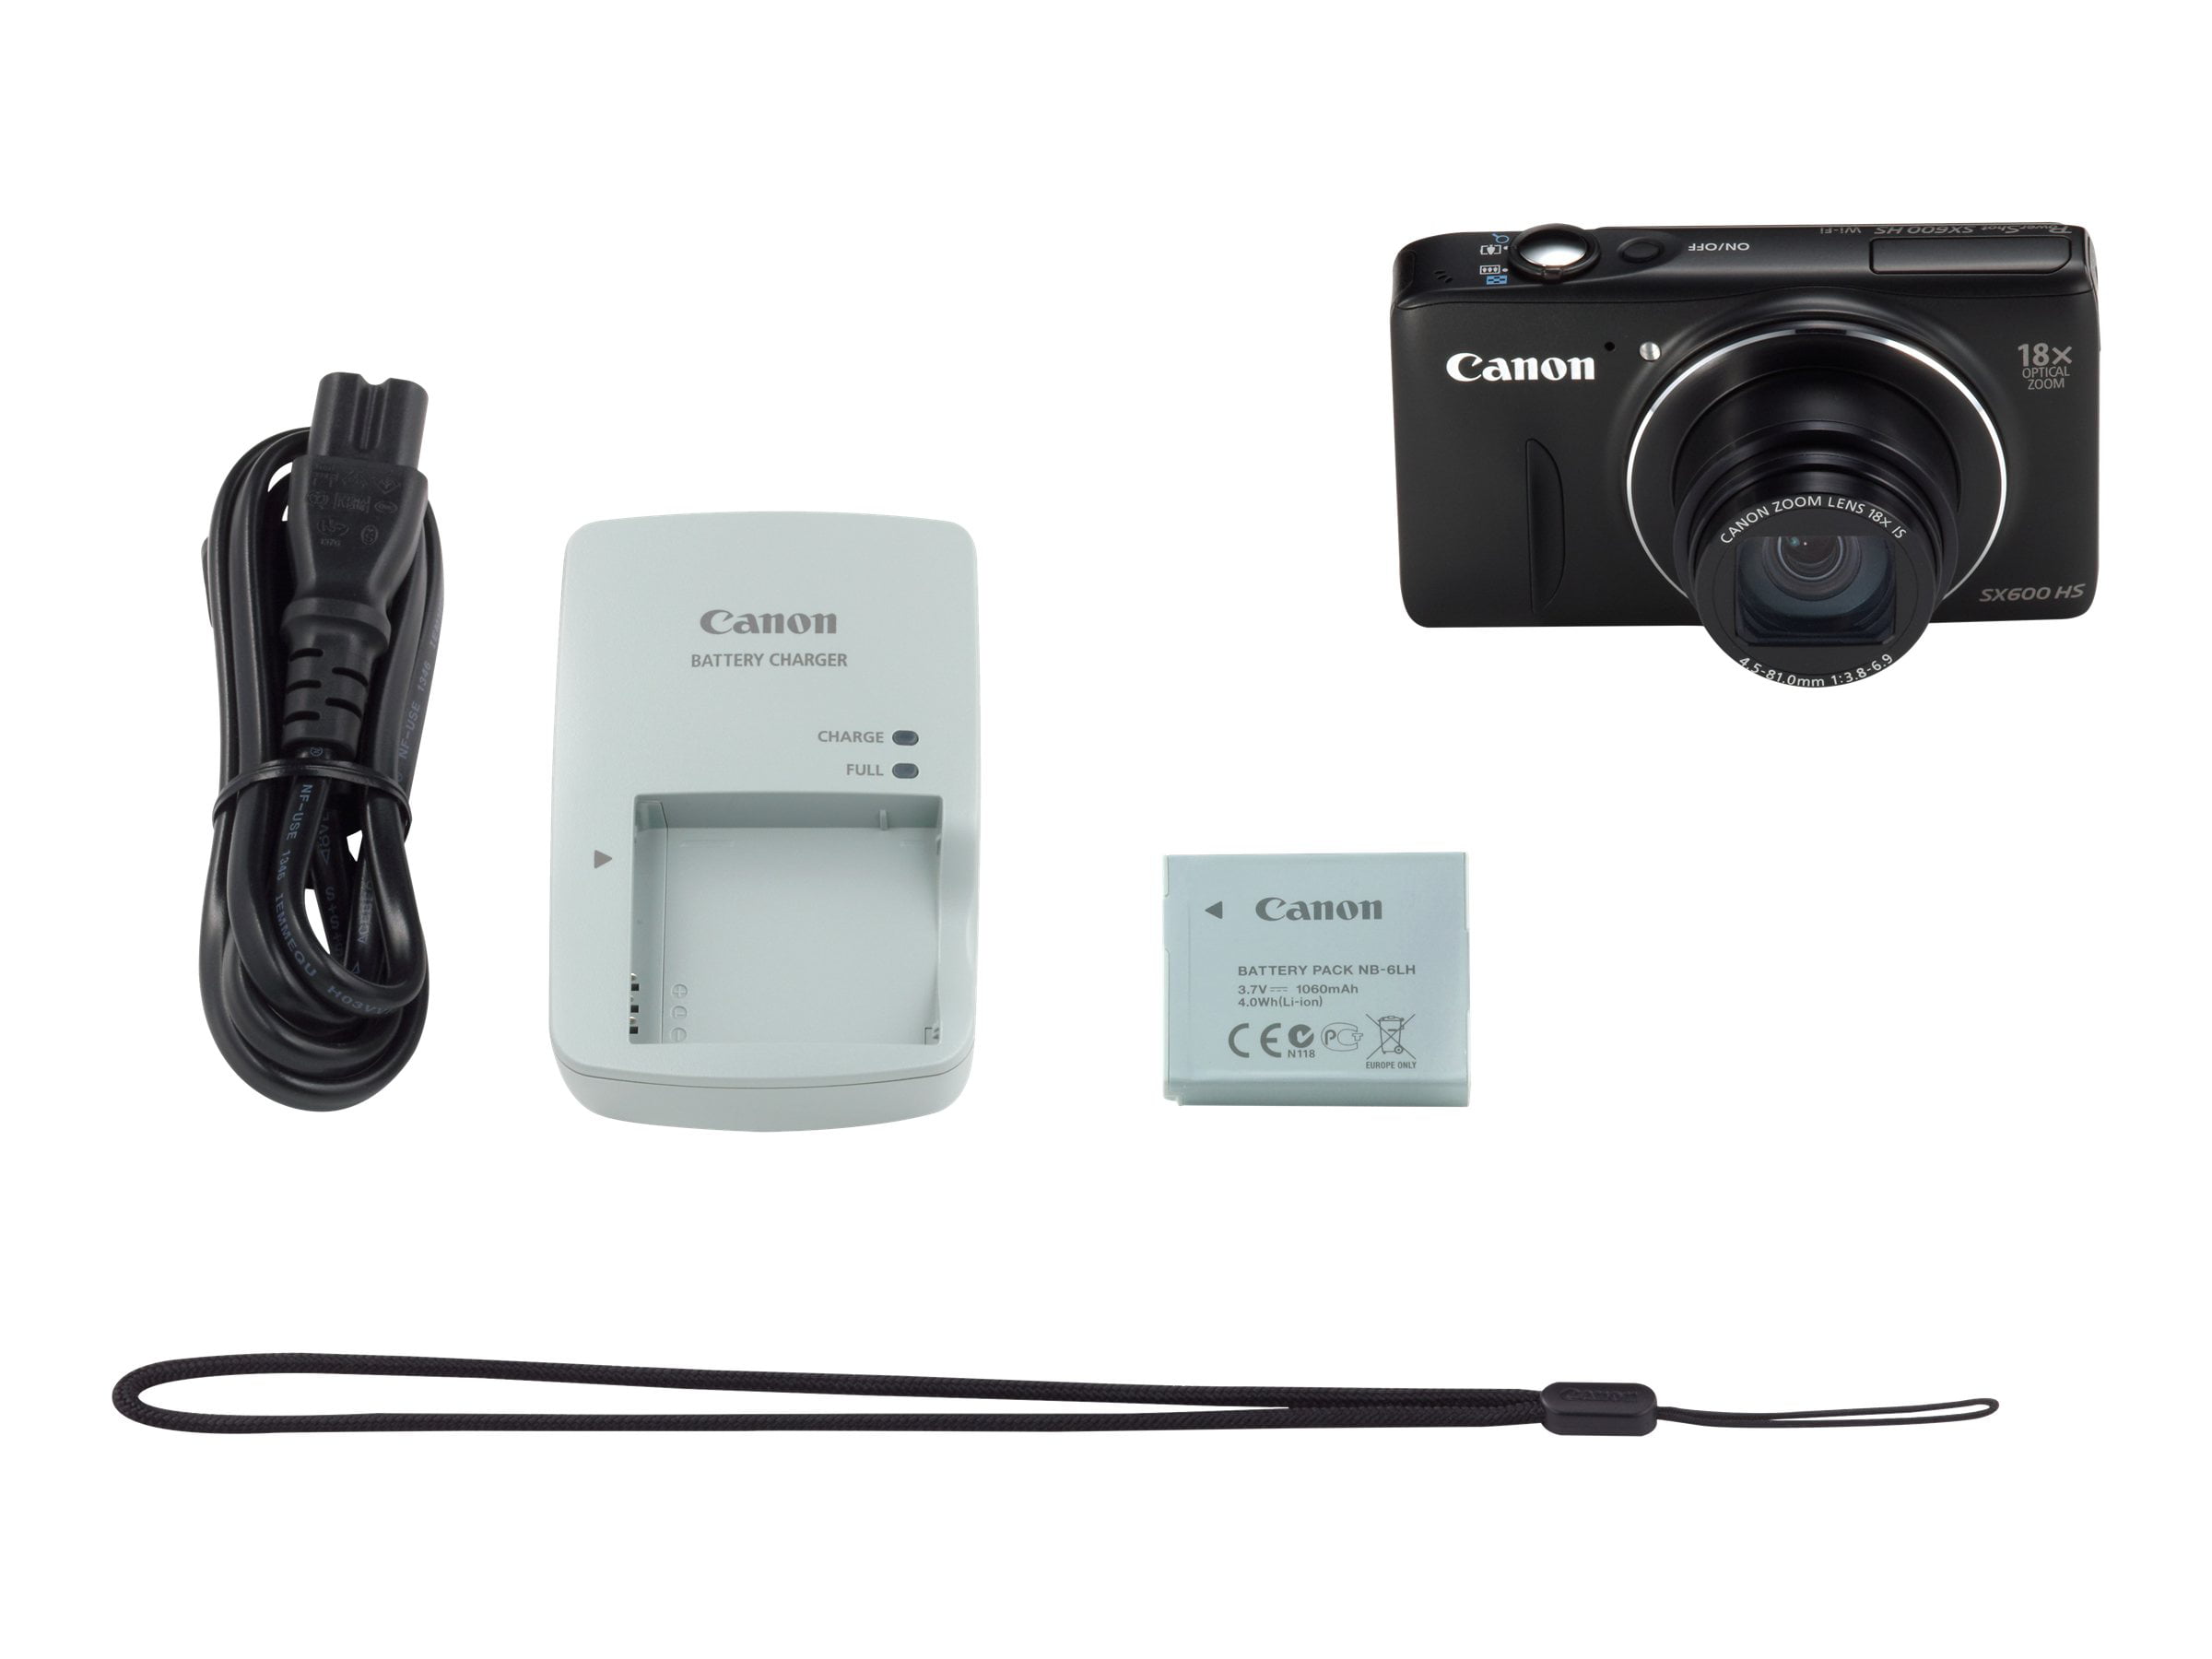 Canon PowerShot SX600 HS - Digital camera - compact - 16.0 MP 